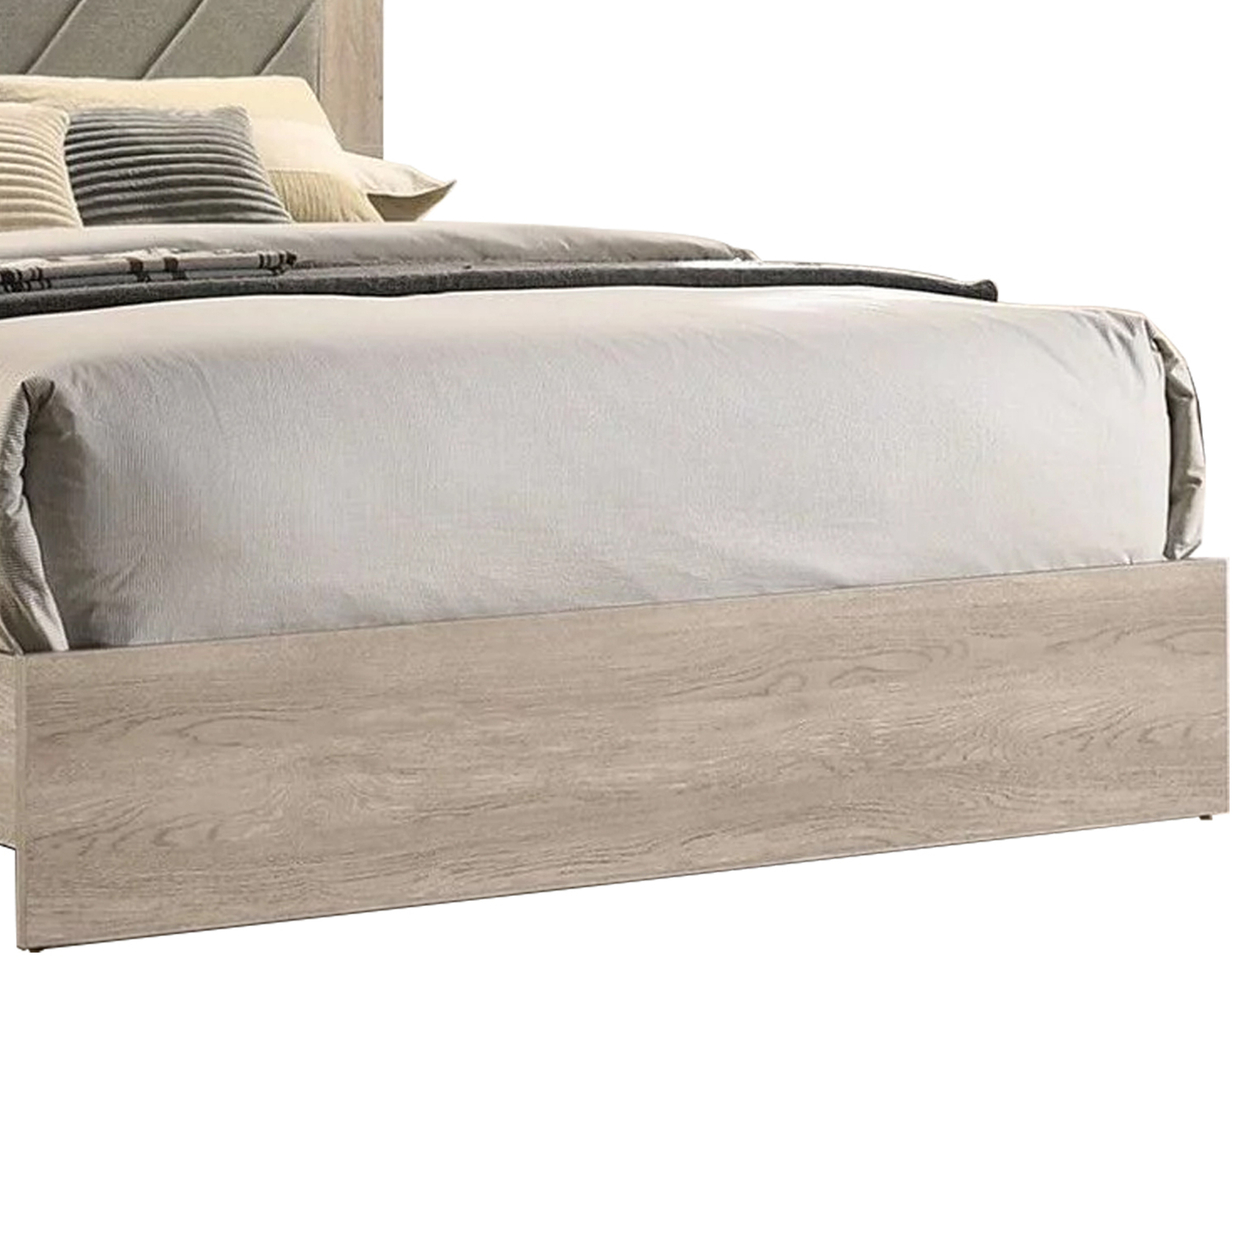 Cato Upholstered Queen Size Bed, Chevron Tufted Gray Headboard, Cream- Saltoro Sherpi